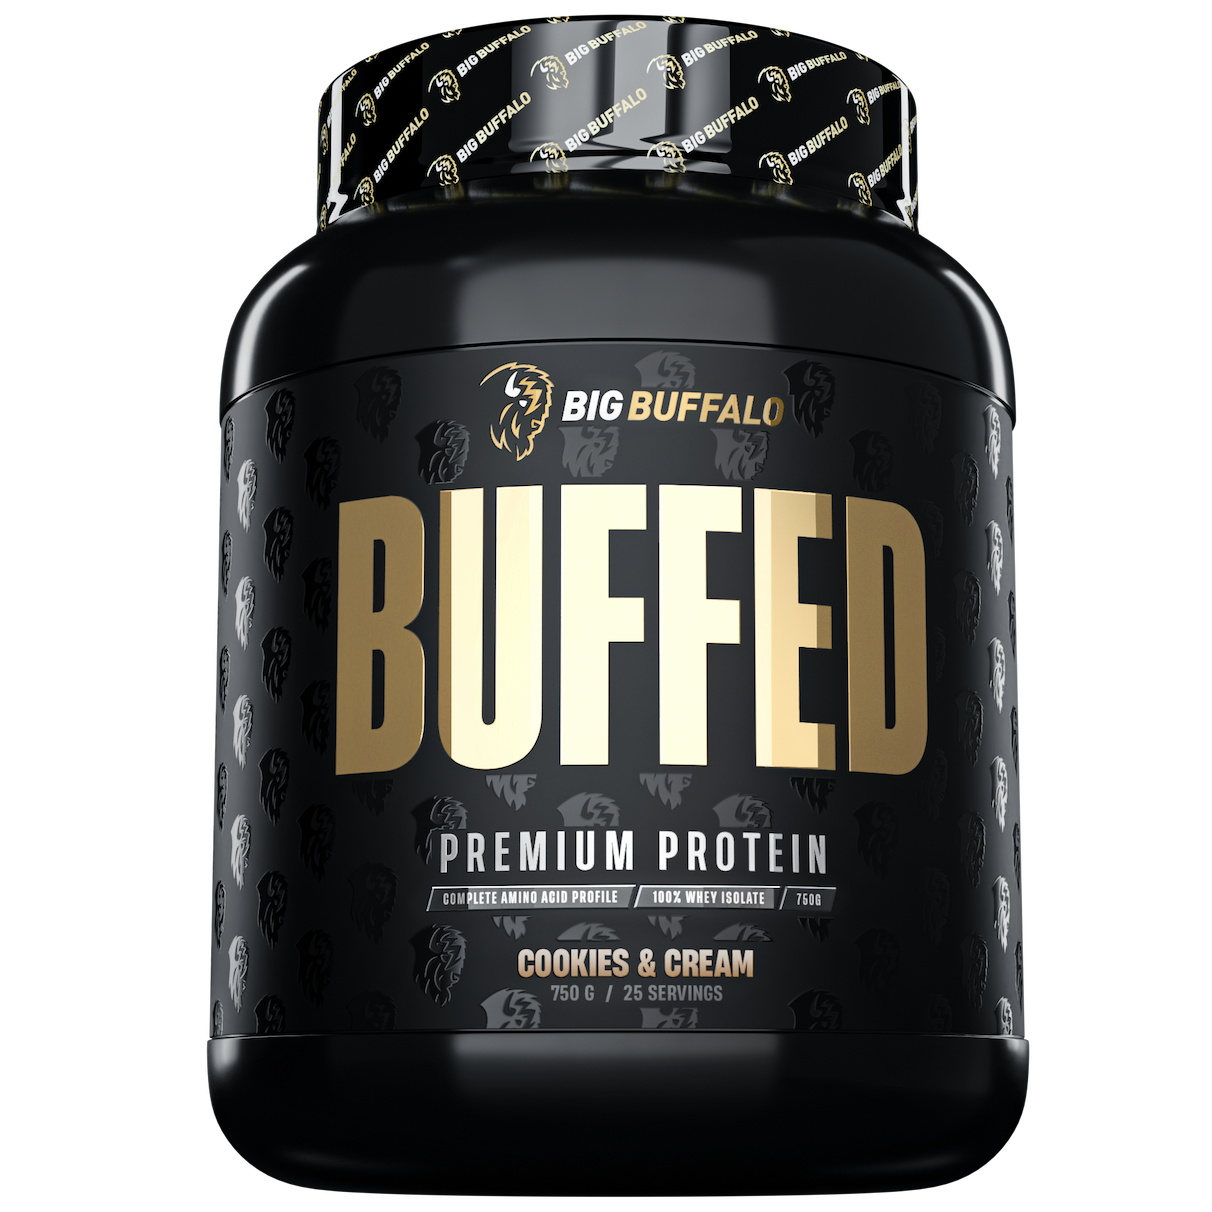 Buffed Premium Protein